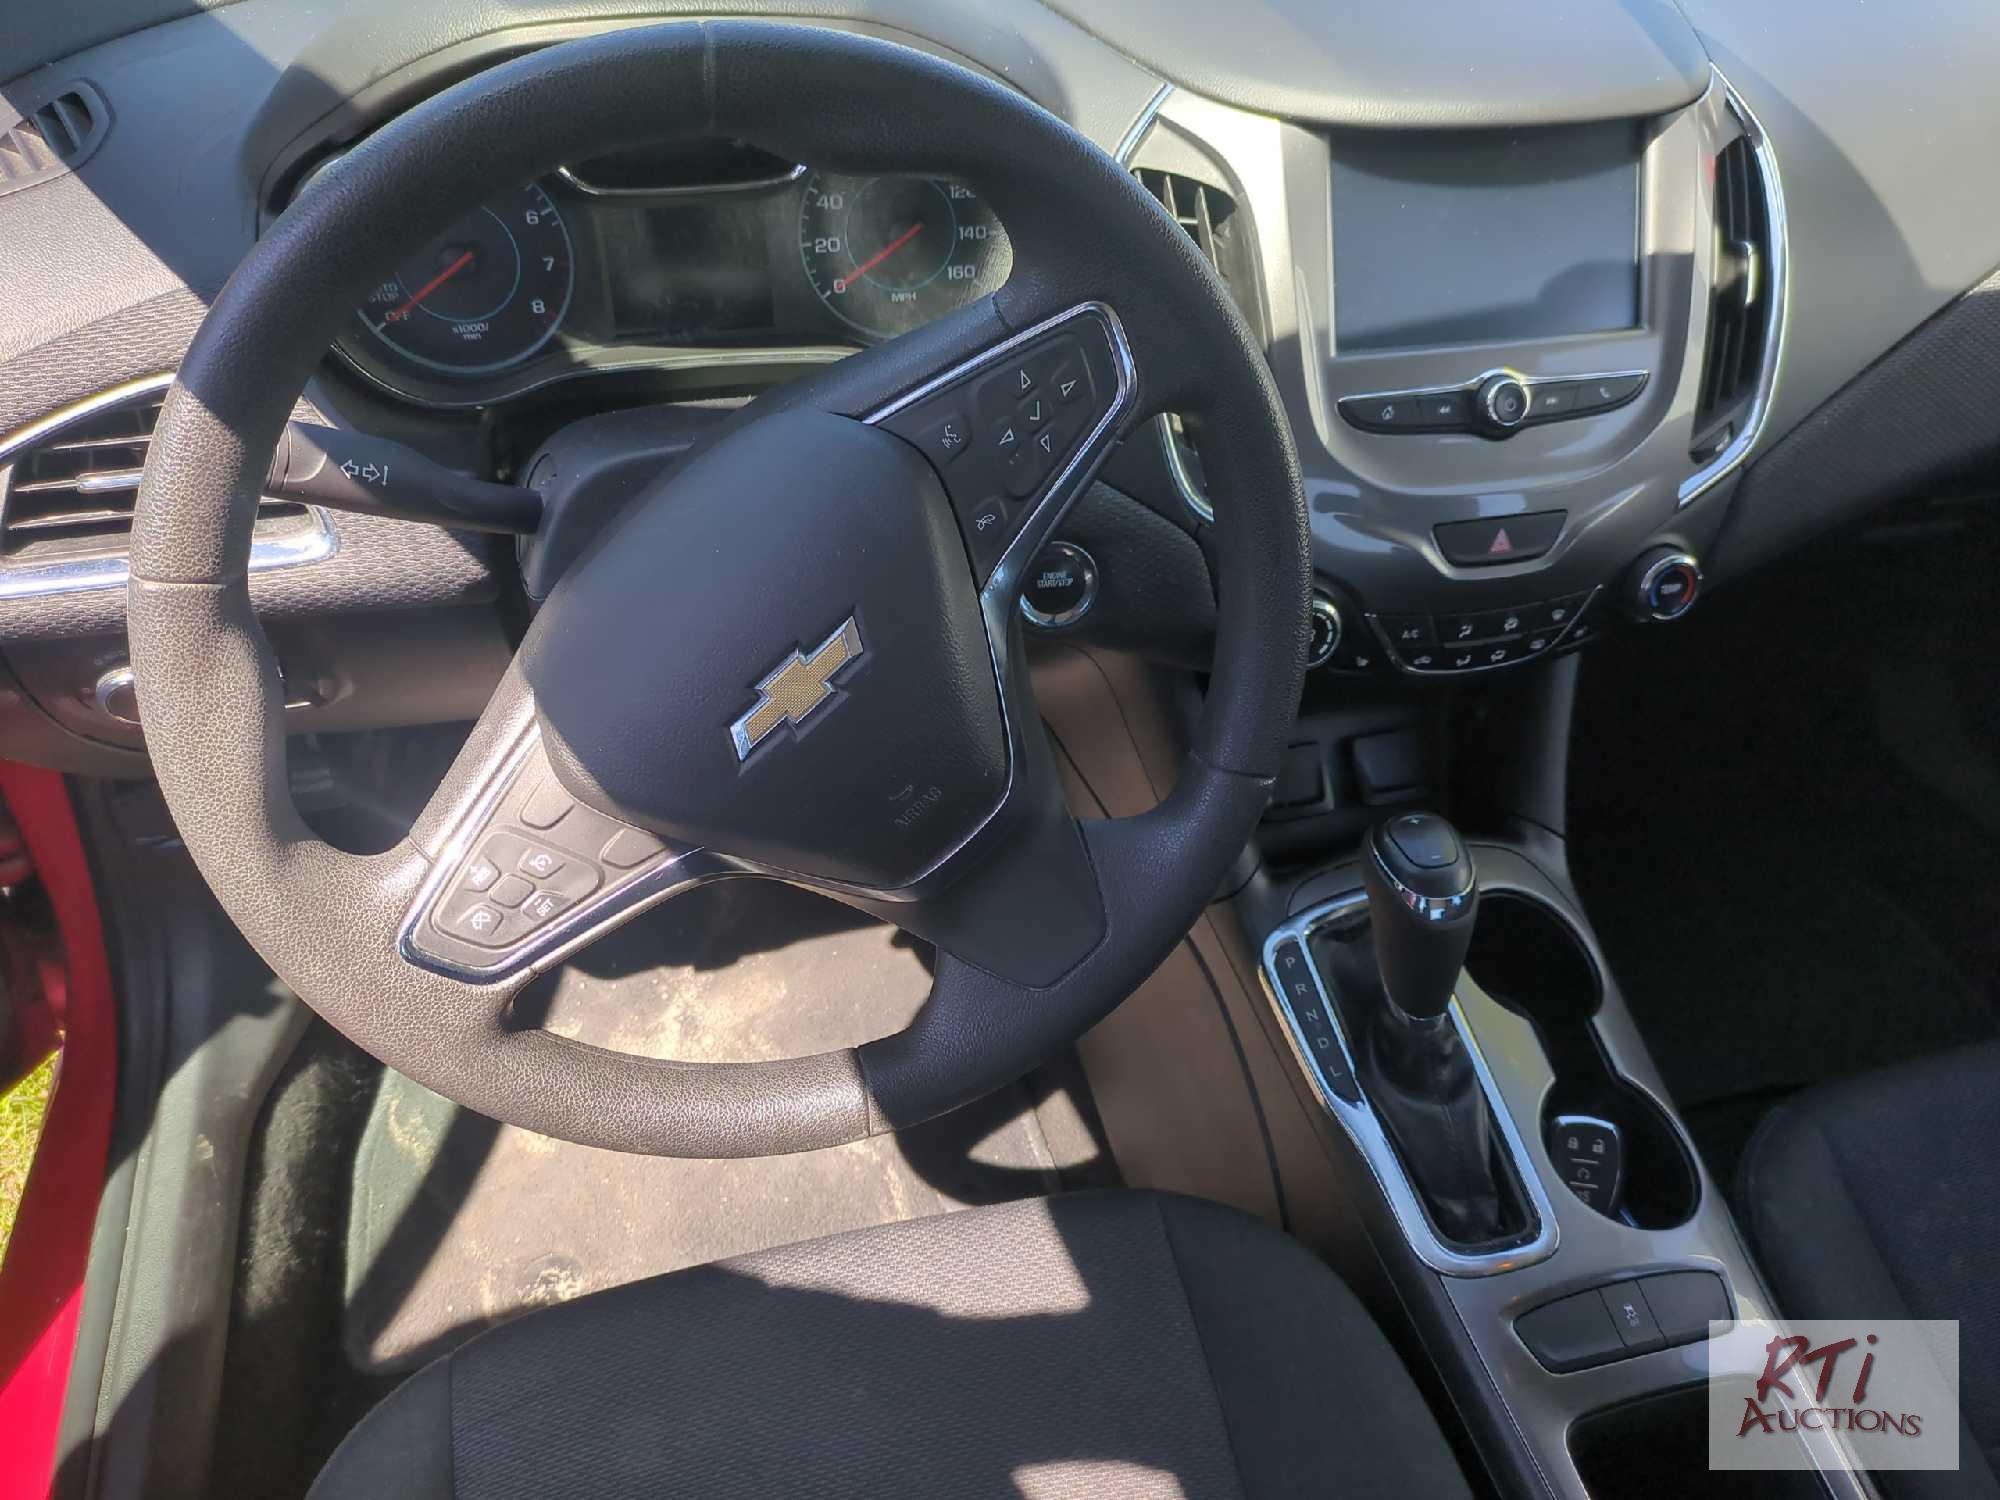 2017 Chevy Cruze LT 4 door sedan, PW, PL, A/C, 2 remote key fobs, 75,590 miles, excellent condition,